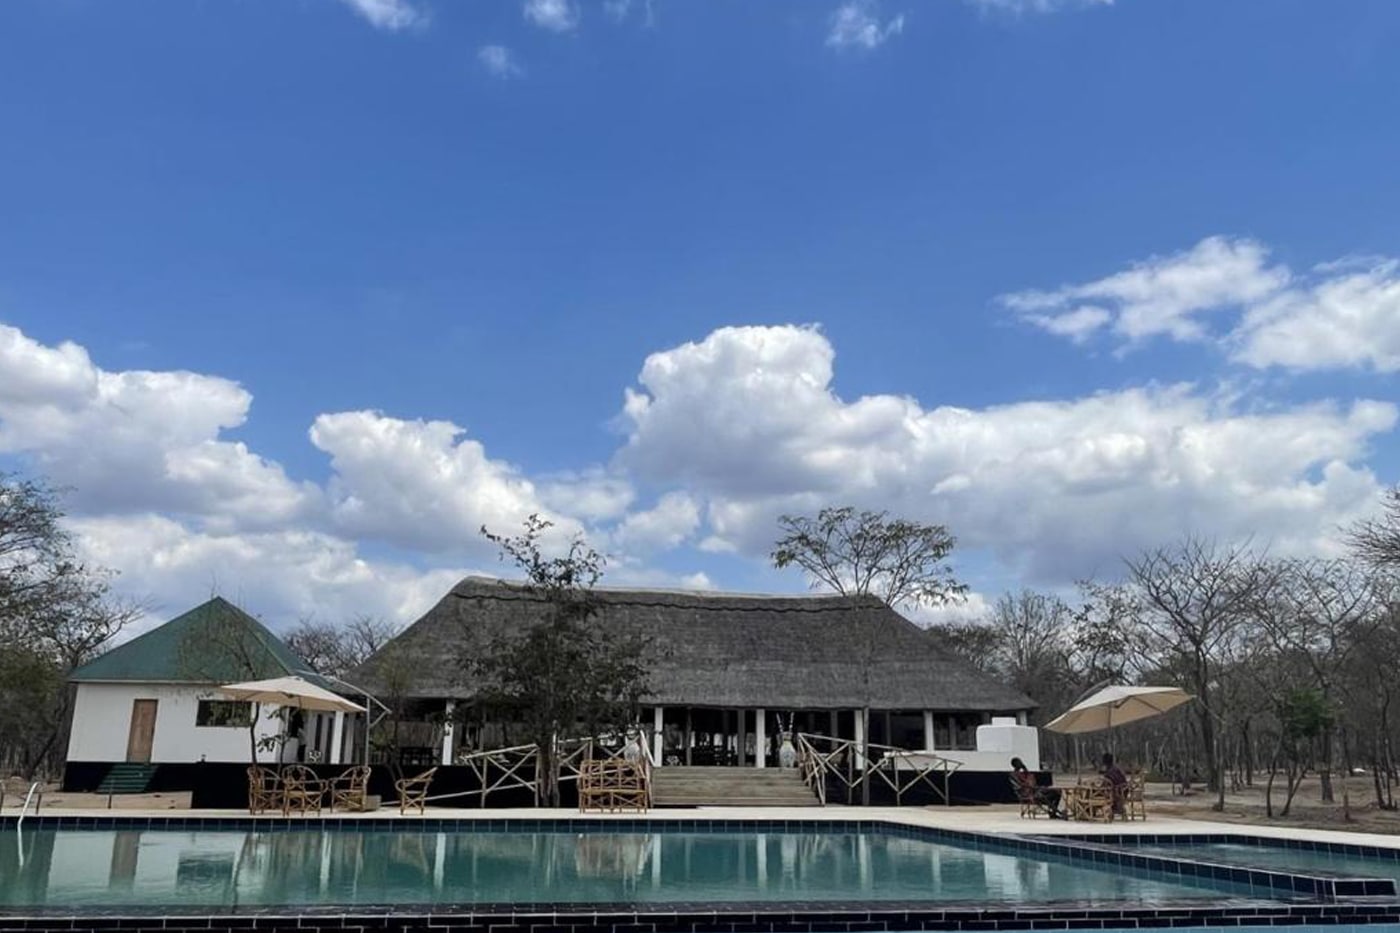 Camp atupele - boende i mikumi nationalpark - easy travel tanzania